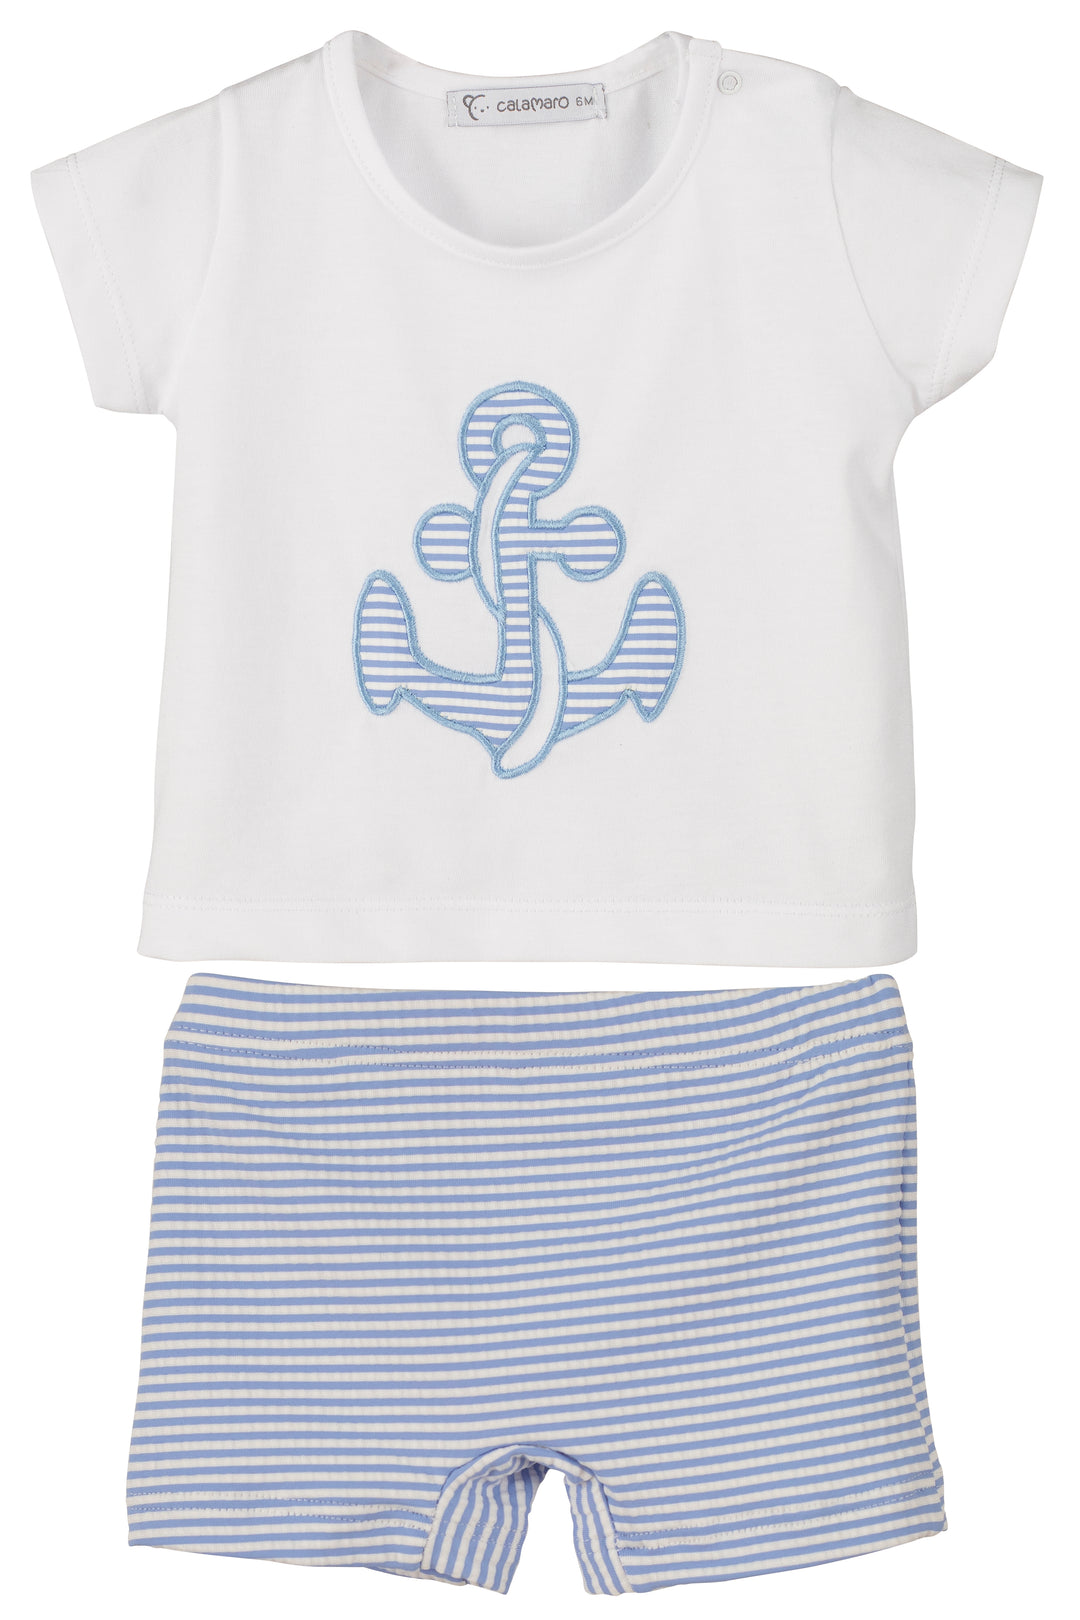 Calamaro PREORDER "Caleb" Blue Striped Anchor Swimwear | Millie and John